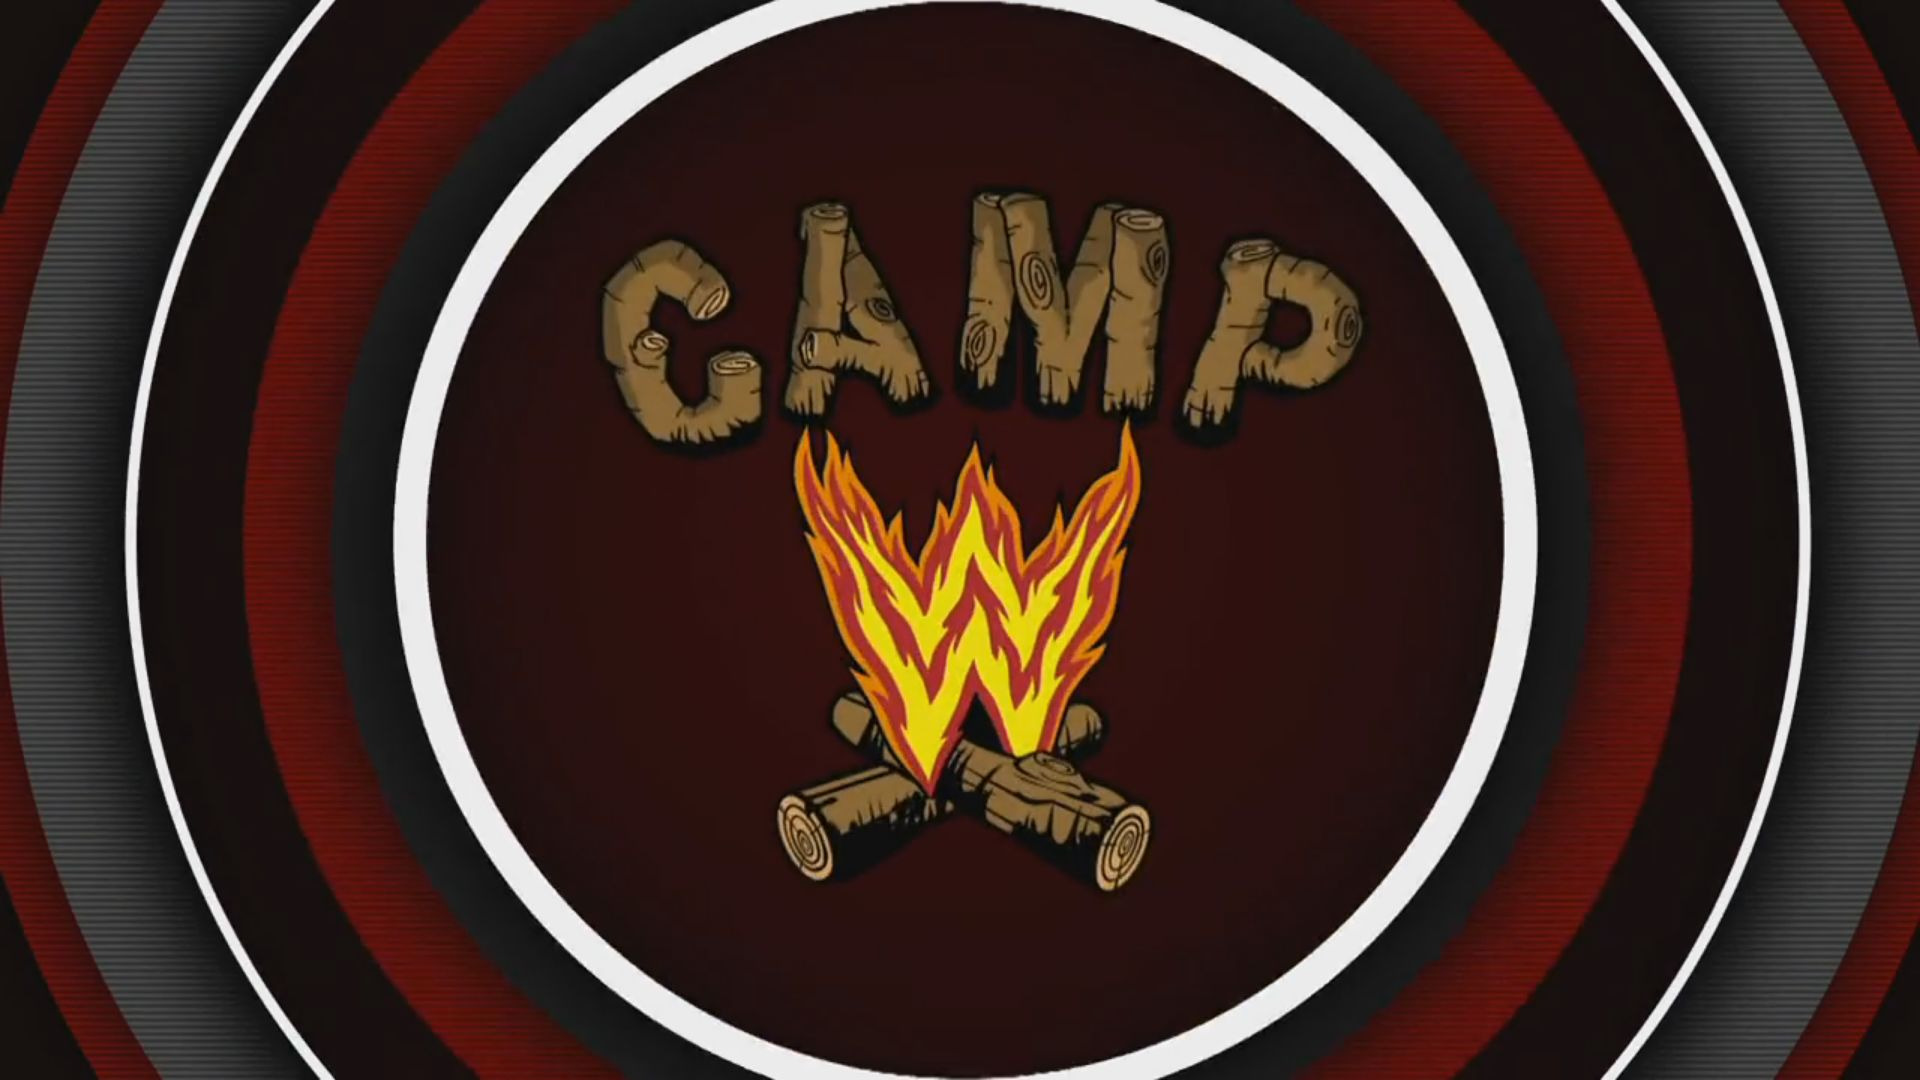 Show Camp WWE